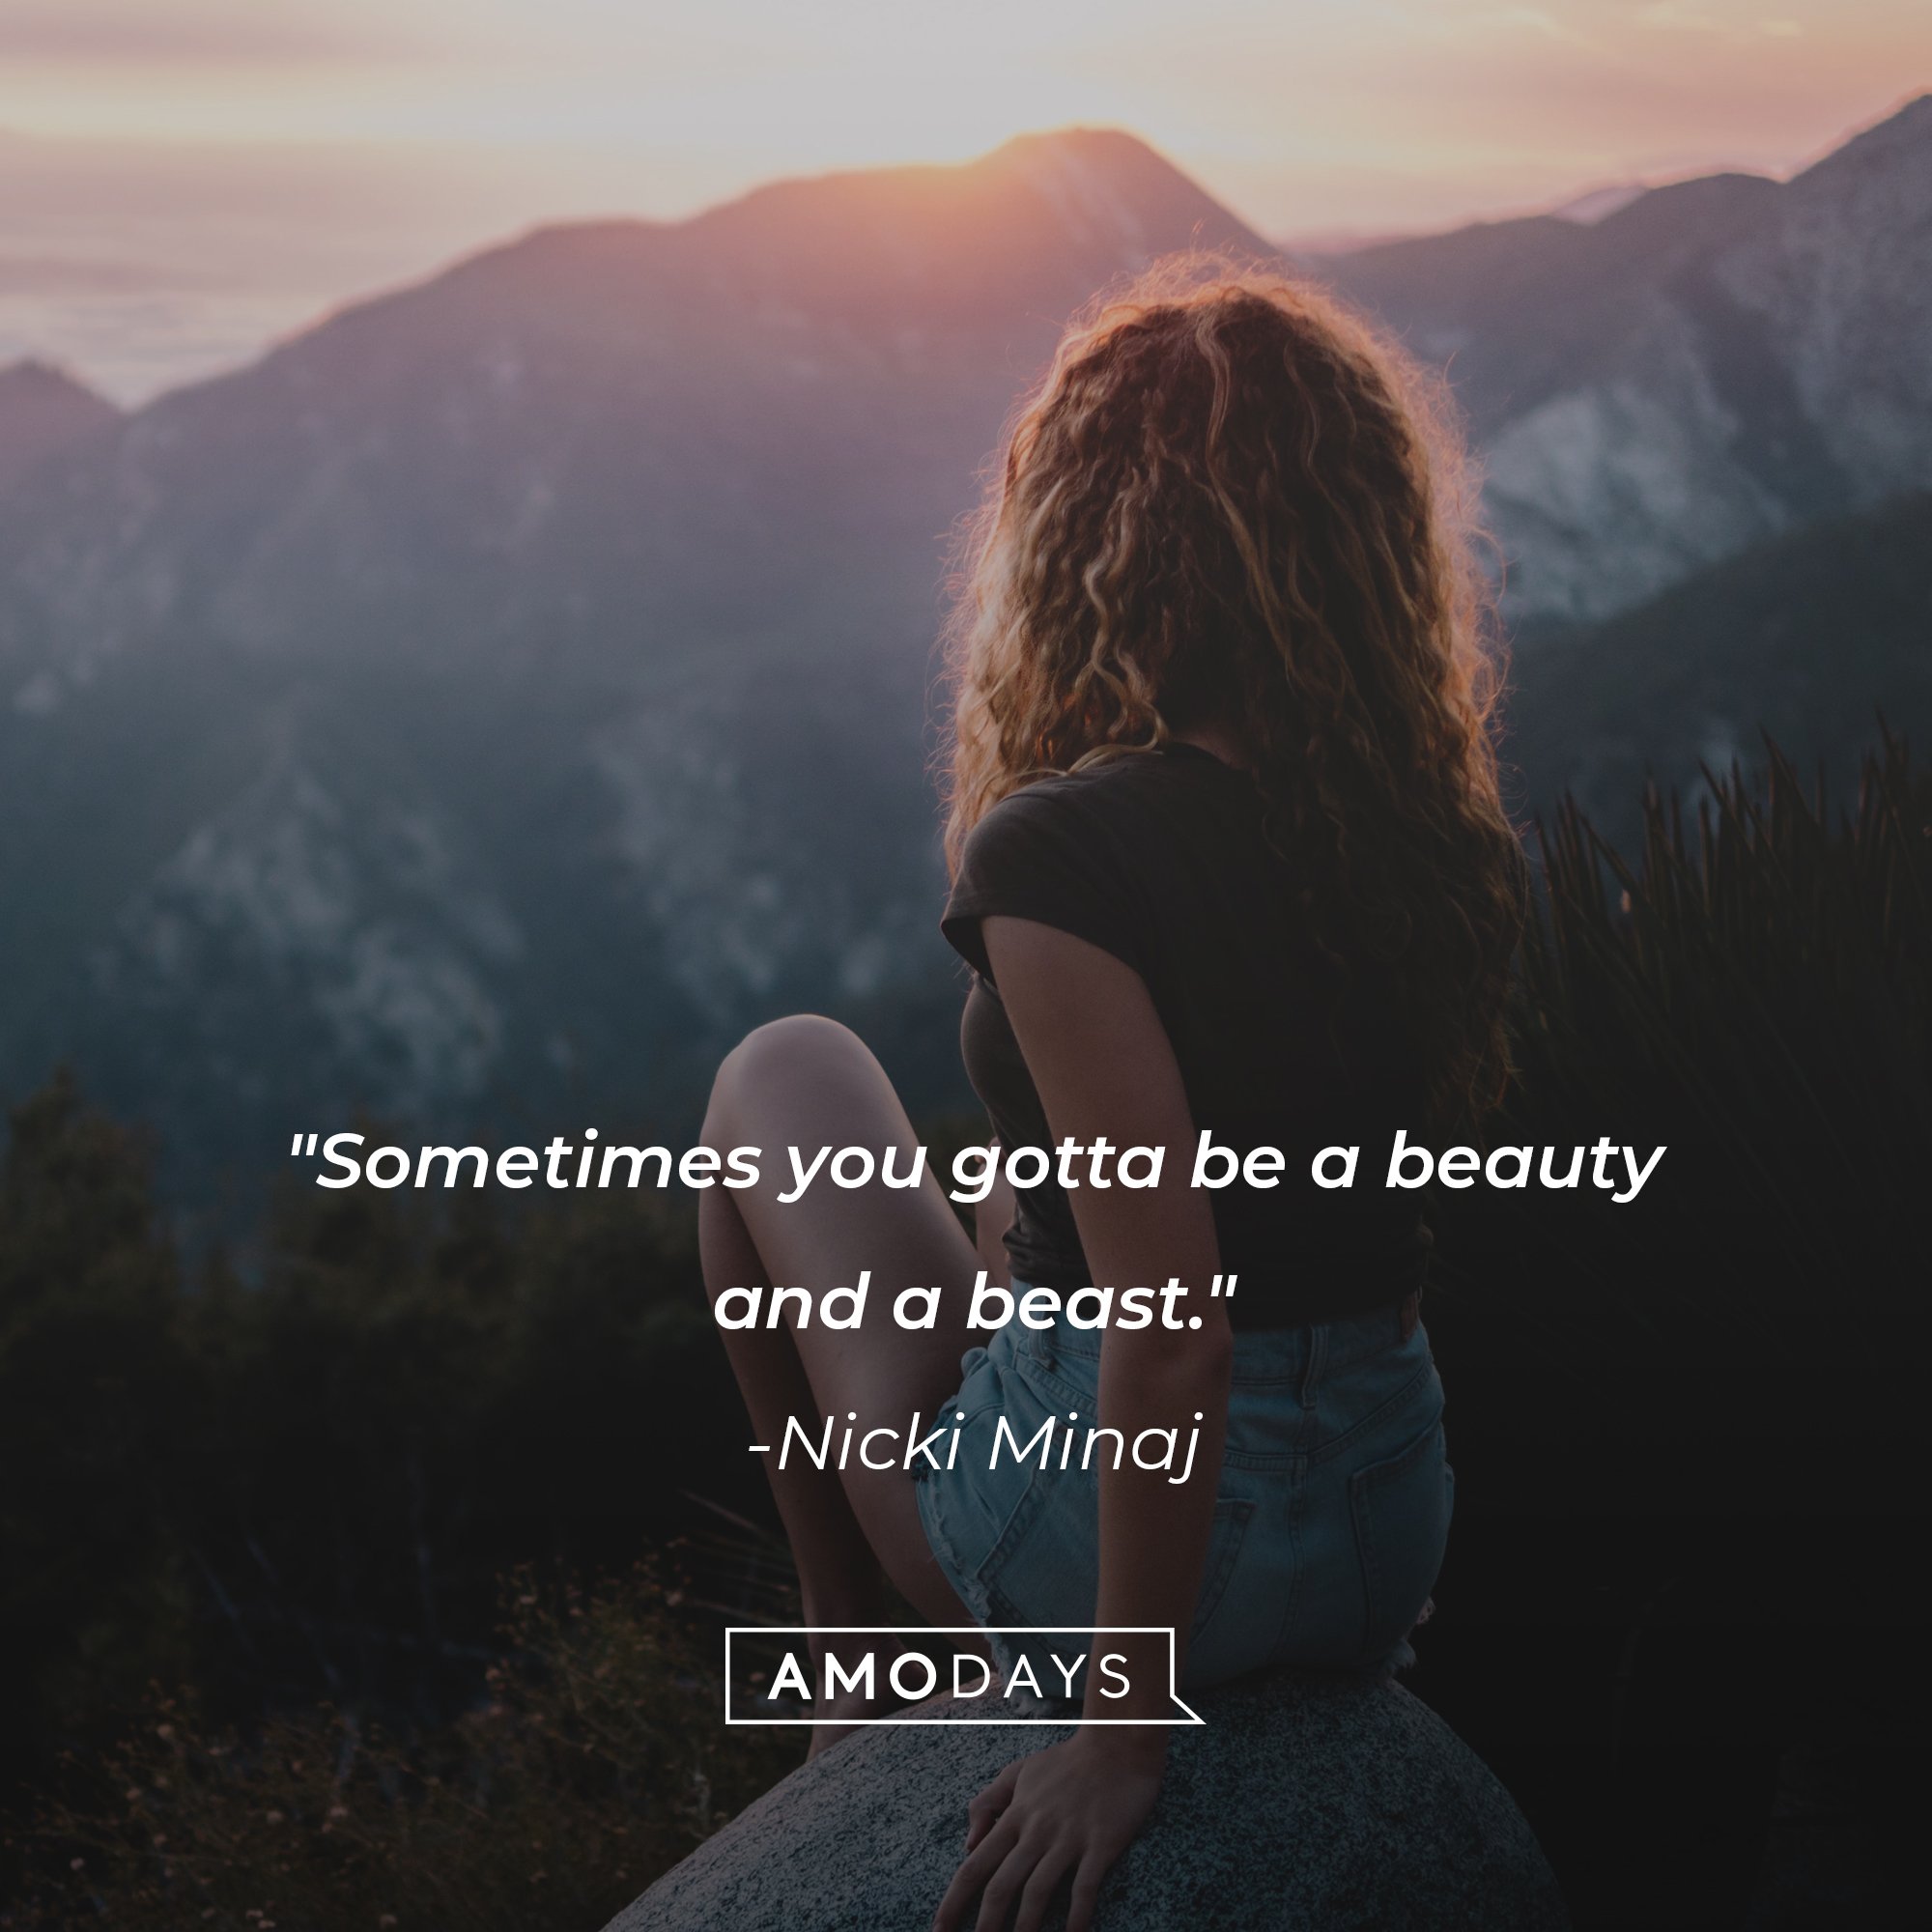 Nicki Minaj’s quote: "Sometimes you gotta be a beauty and a beast." | Image: AmoDays